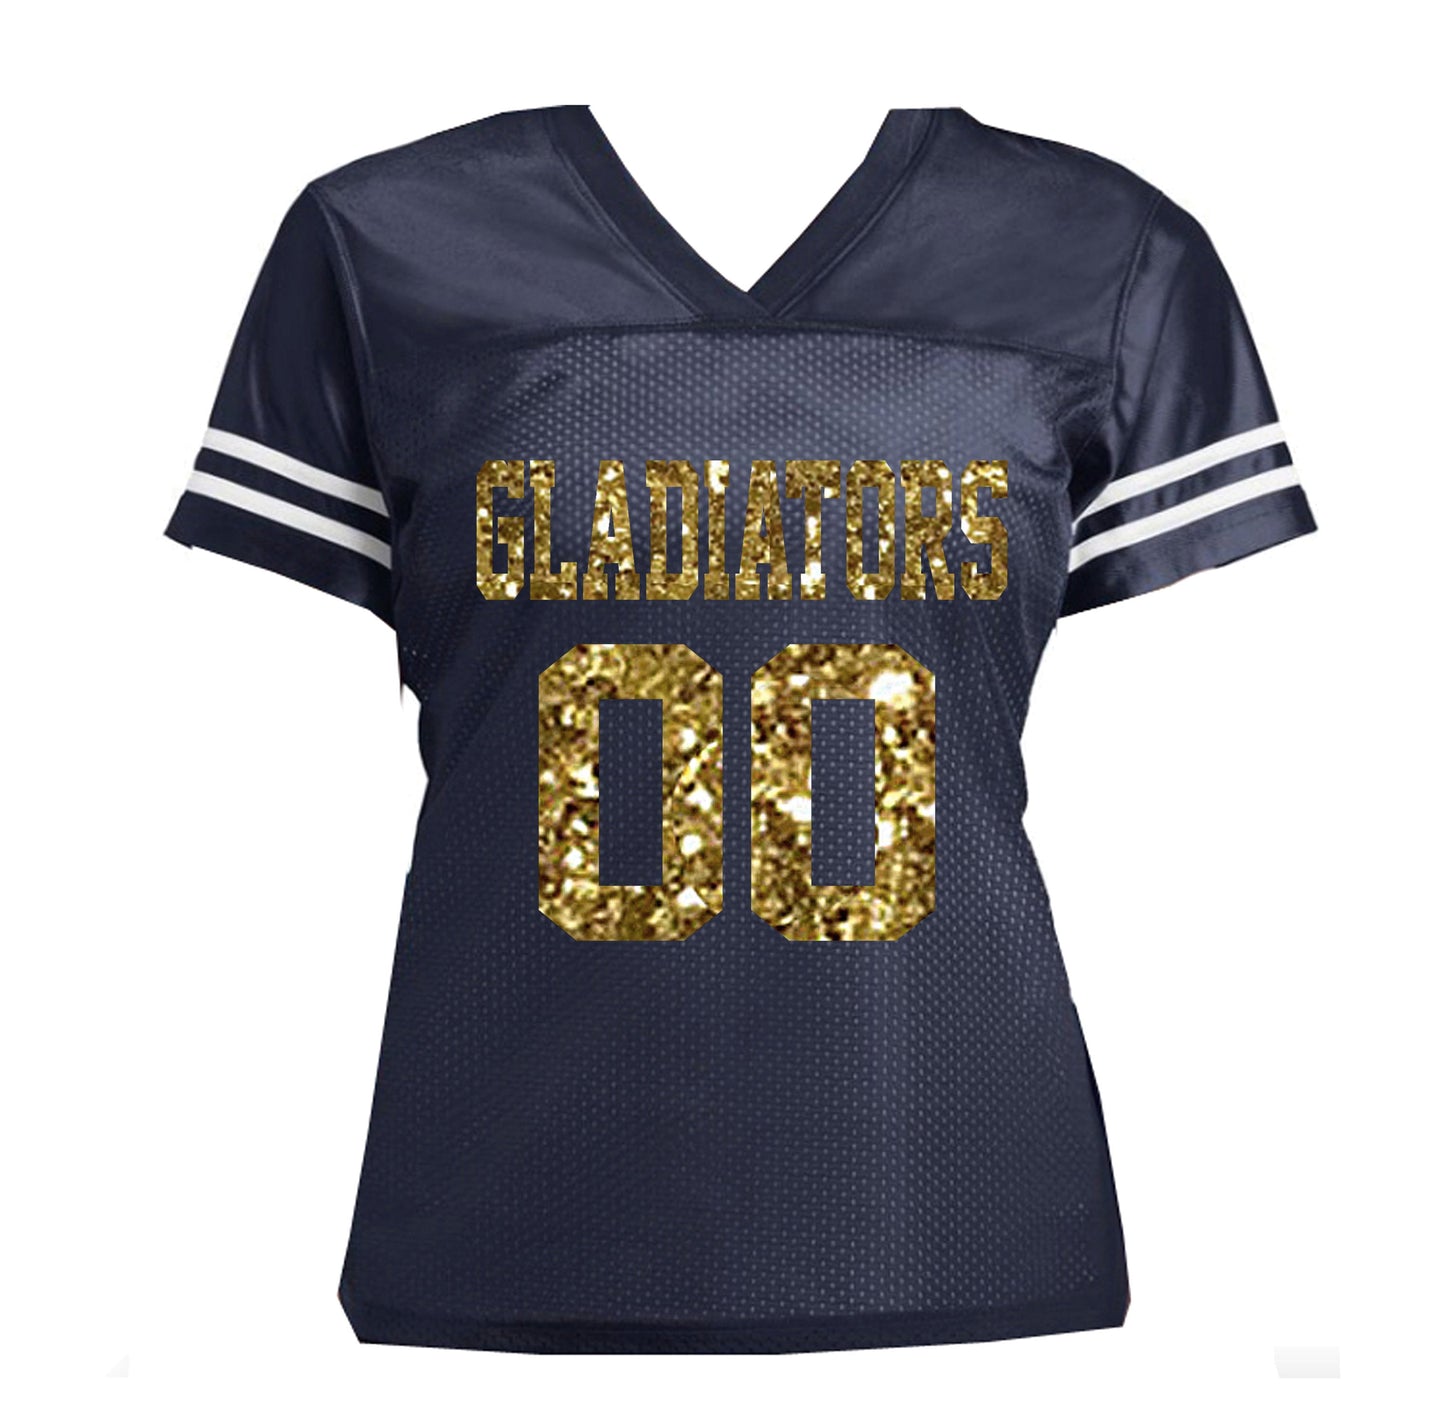 Glitter Football Women's Mom Jersey with School Team Name, Gladiators